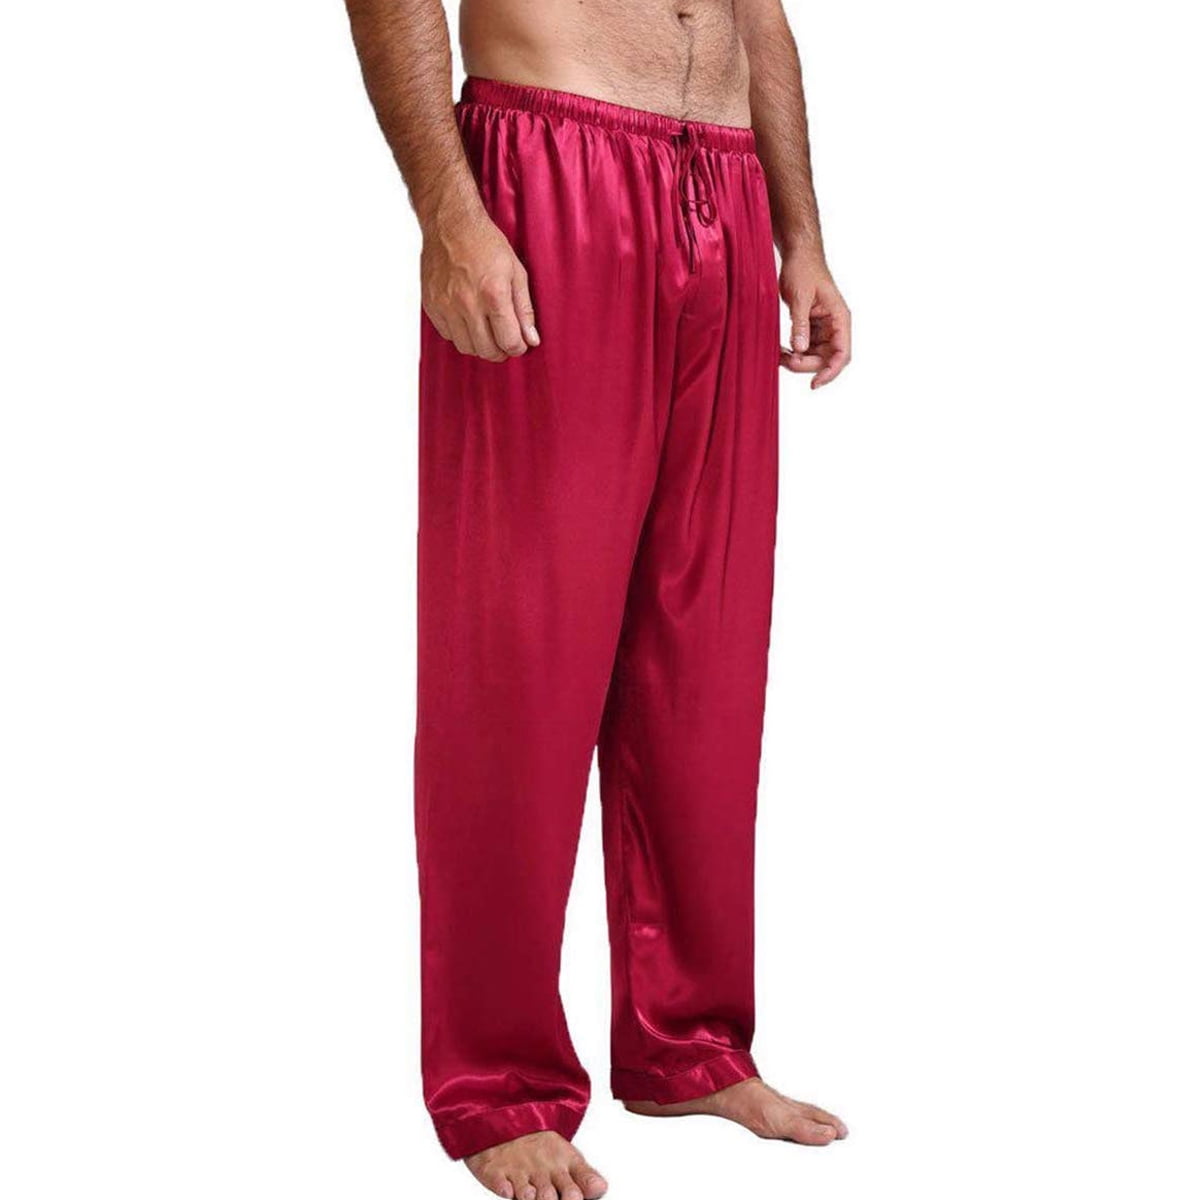 PDYLZWZY Men Silk Satin Pajamas Pants Sleep Bottoms Nightwear Sleepwear ...